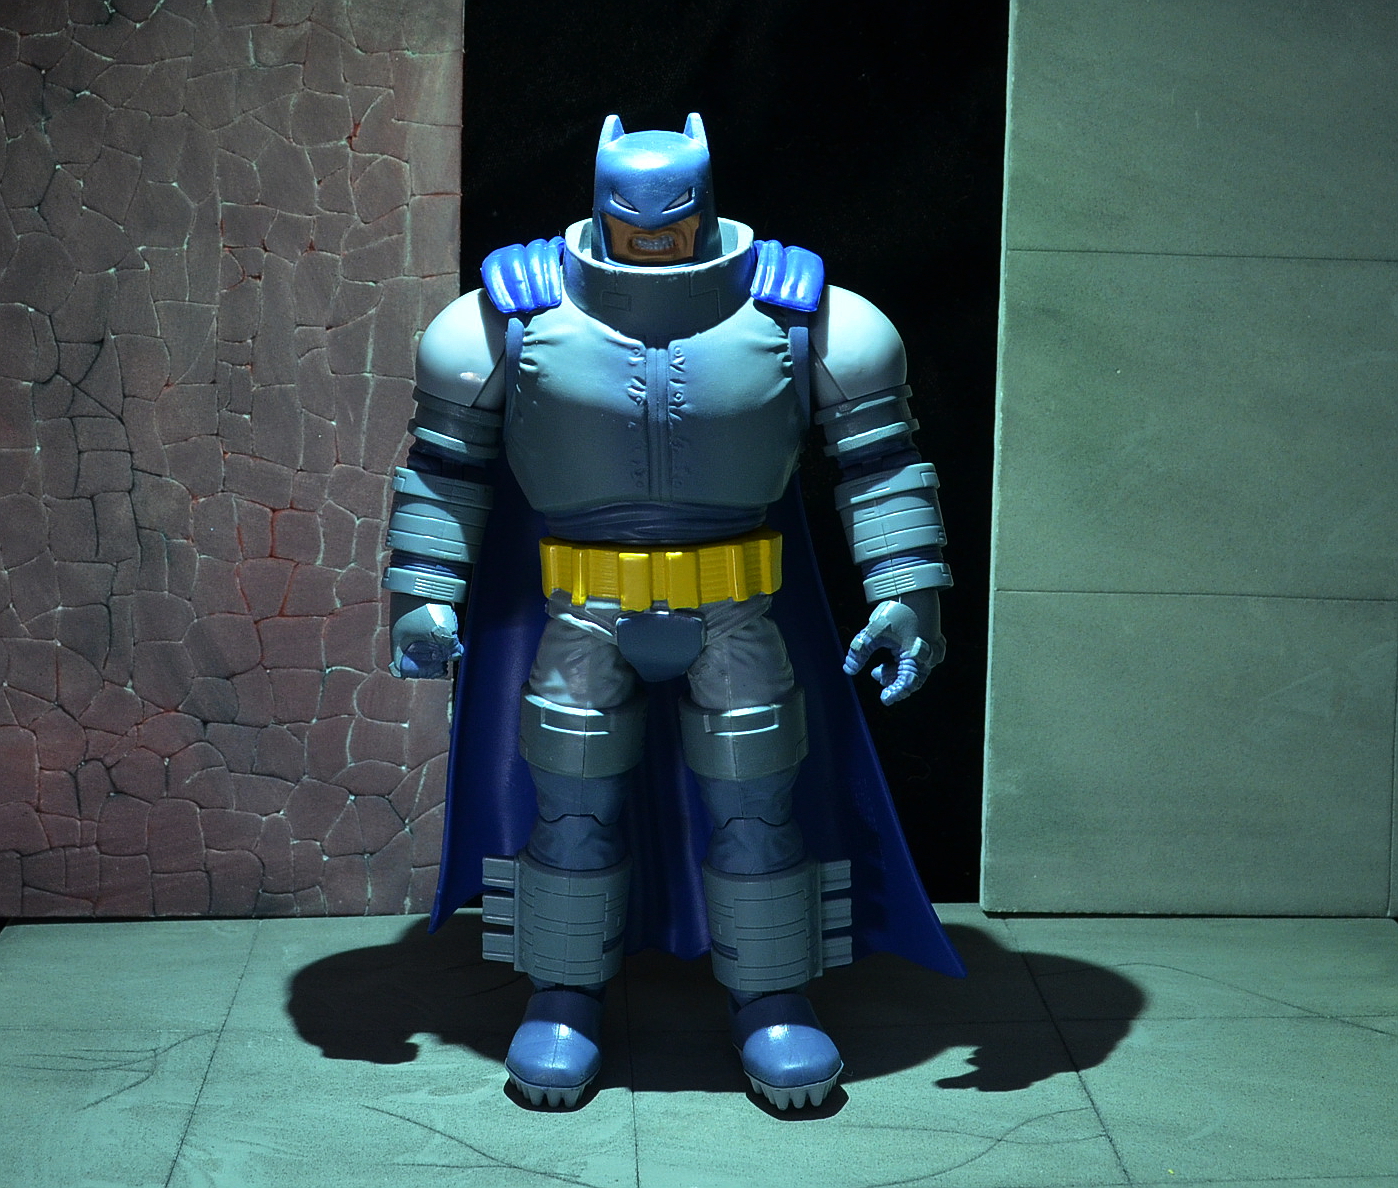 Mattel 2016 DC Multiverse 6" Figure Dark Knight Returns Armored Batman DNW68 for sale online 